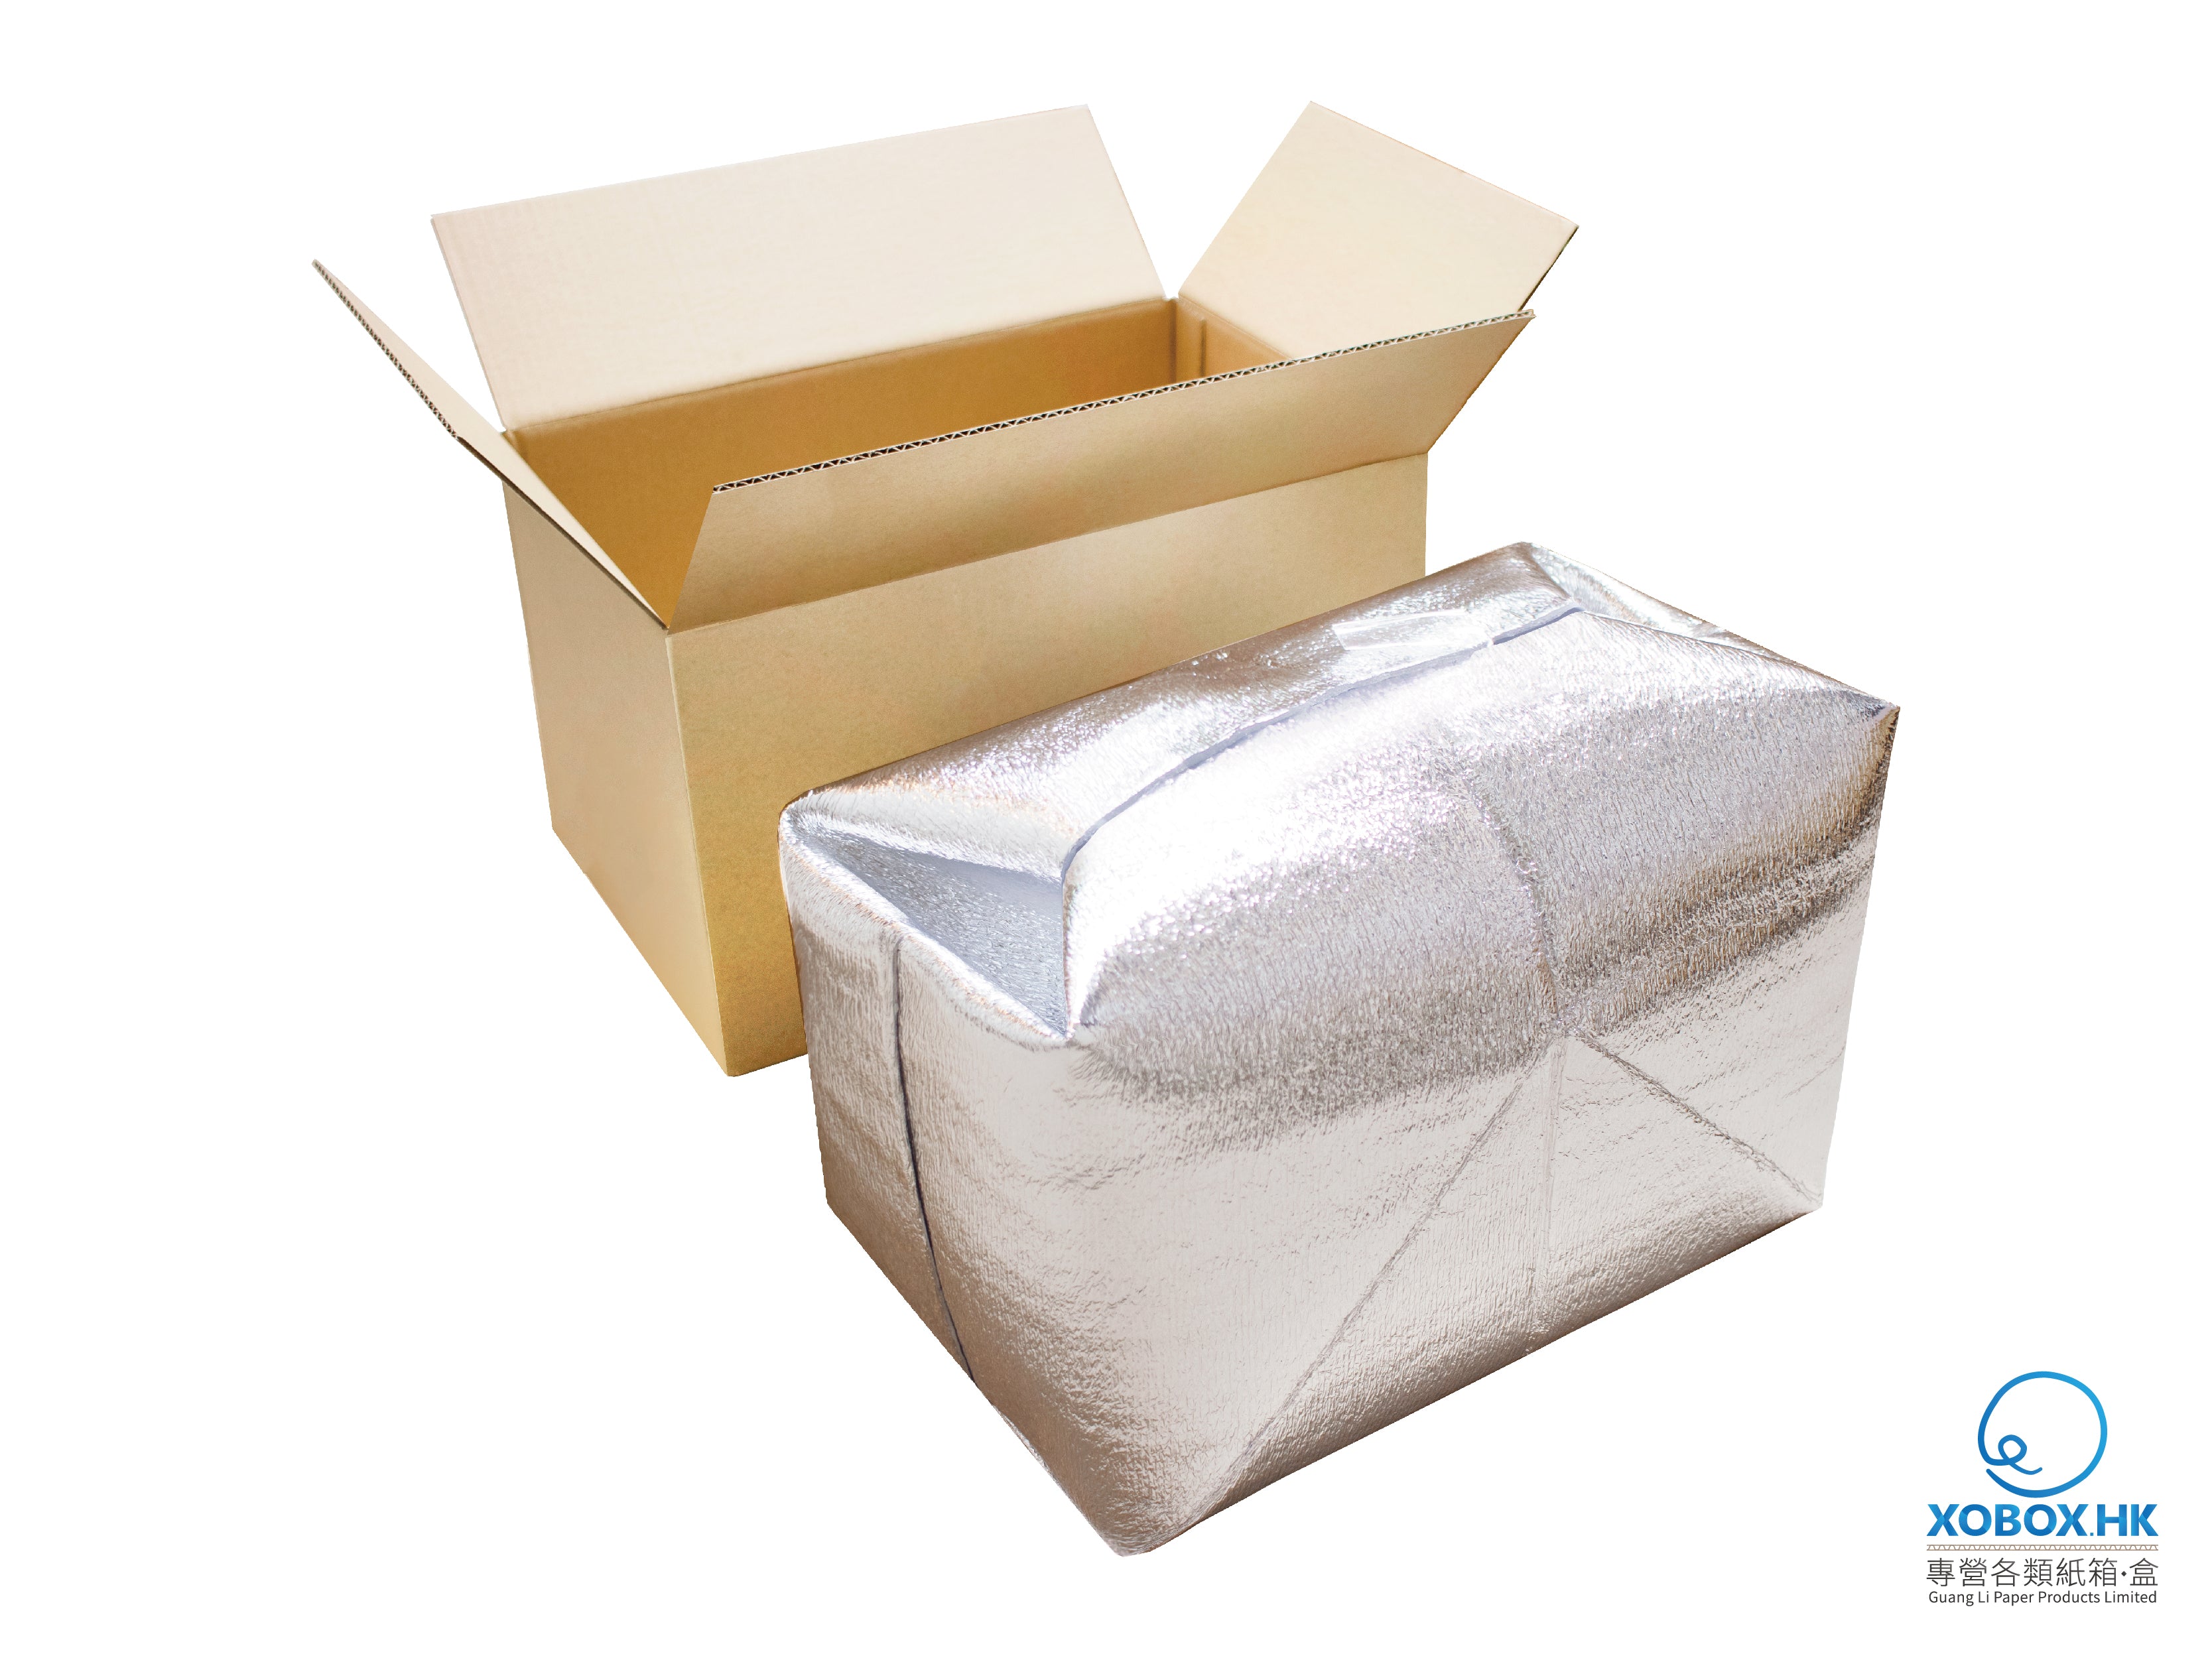 Insulated Foil Box Set 鋁箔保溫紙箱(10套/件)